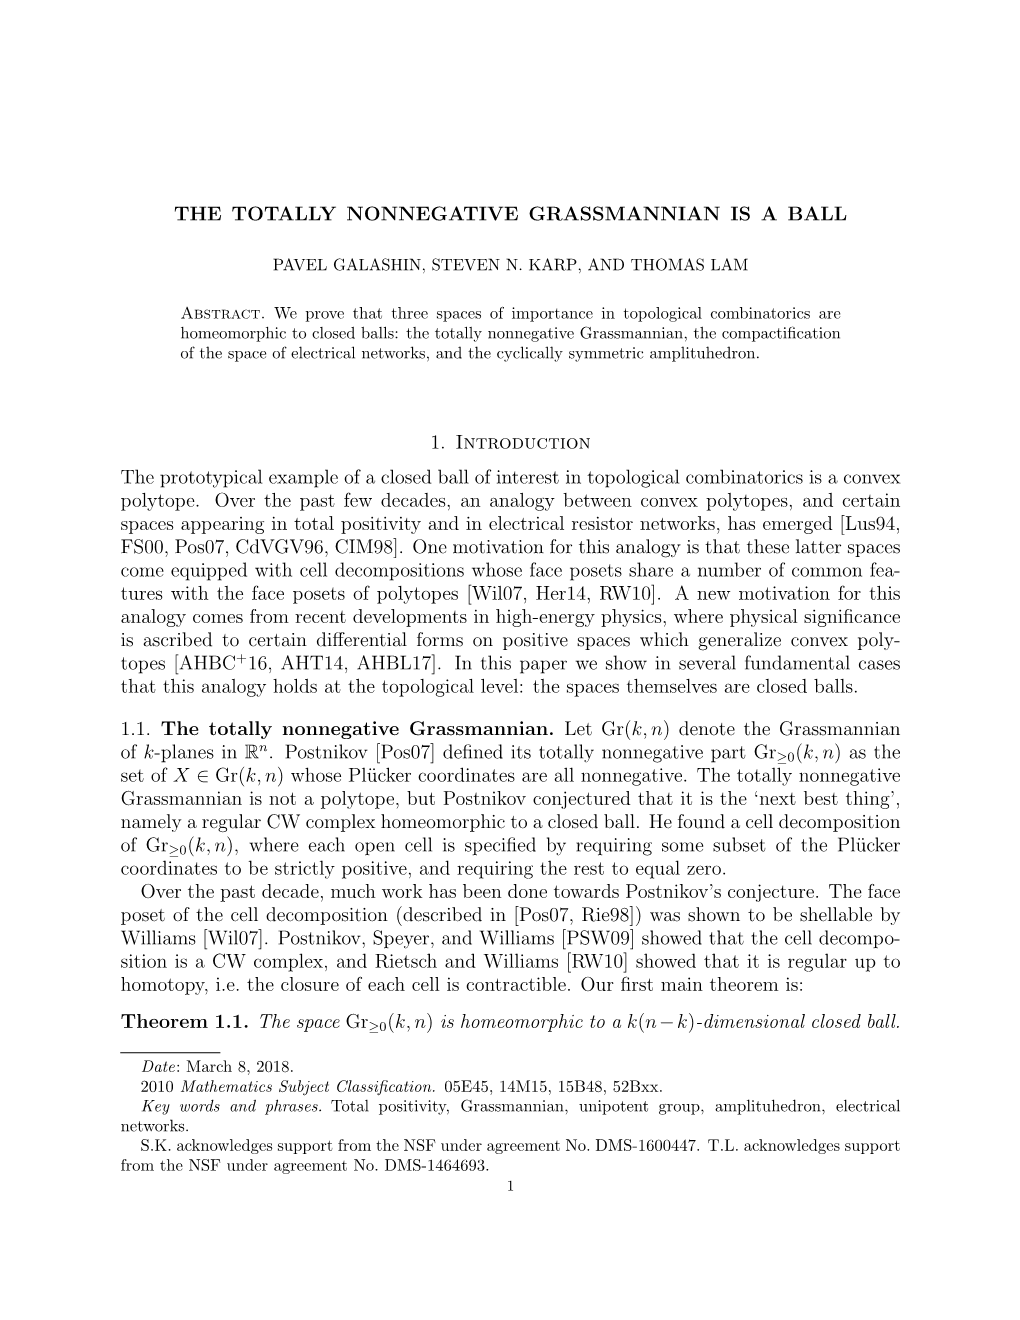 The Totally Nonnegative Grassmannian Is a Ball 11